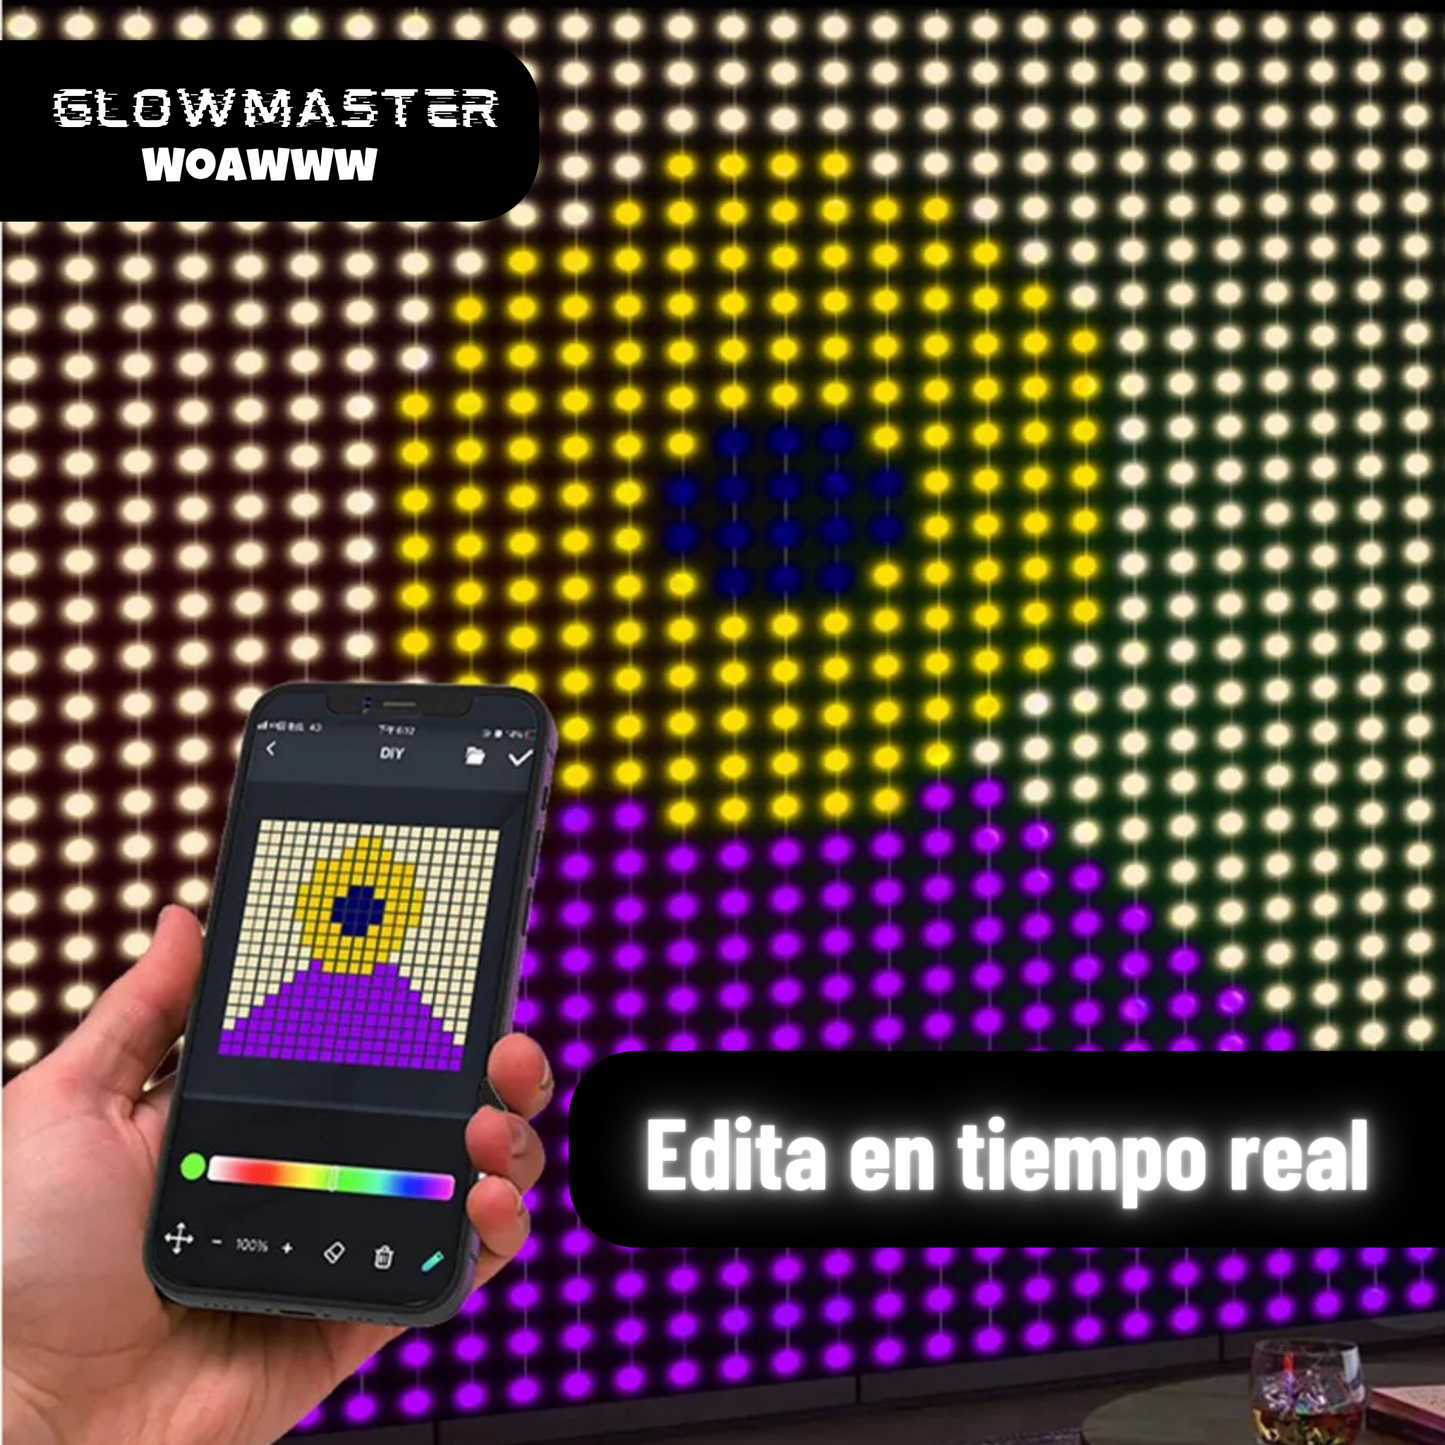 GLOWMASTER LEDS RGB personalizables de cortina